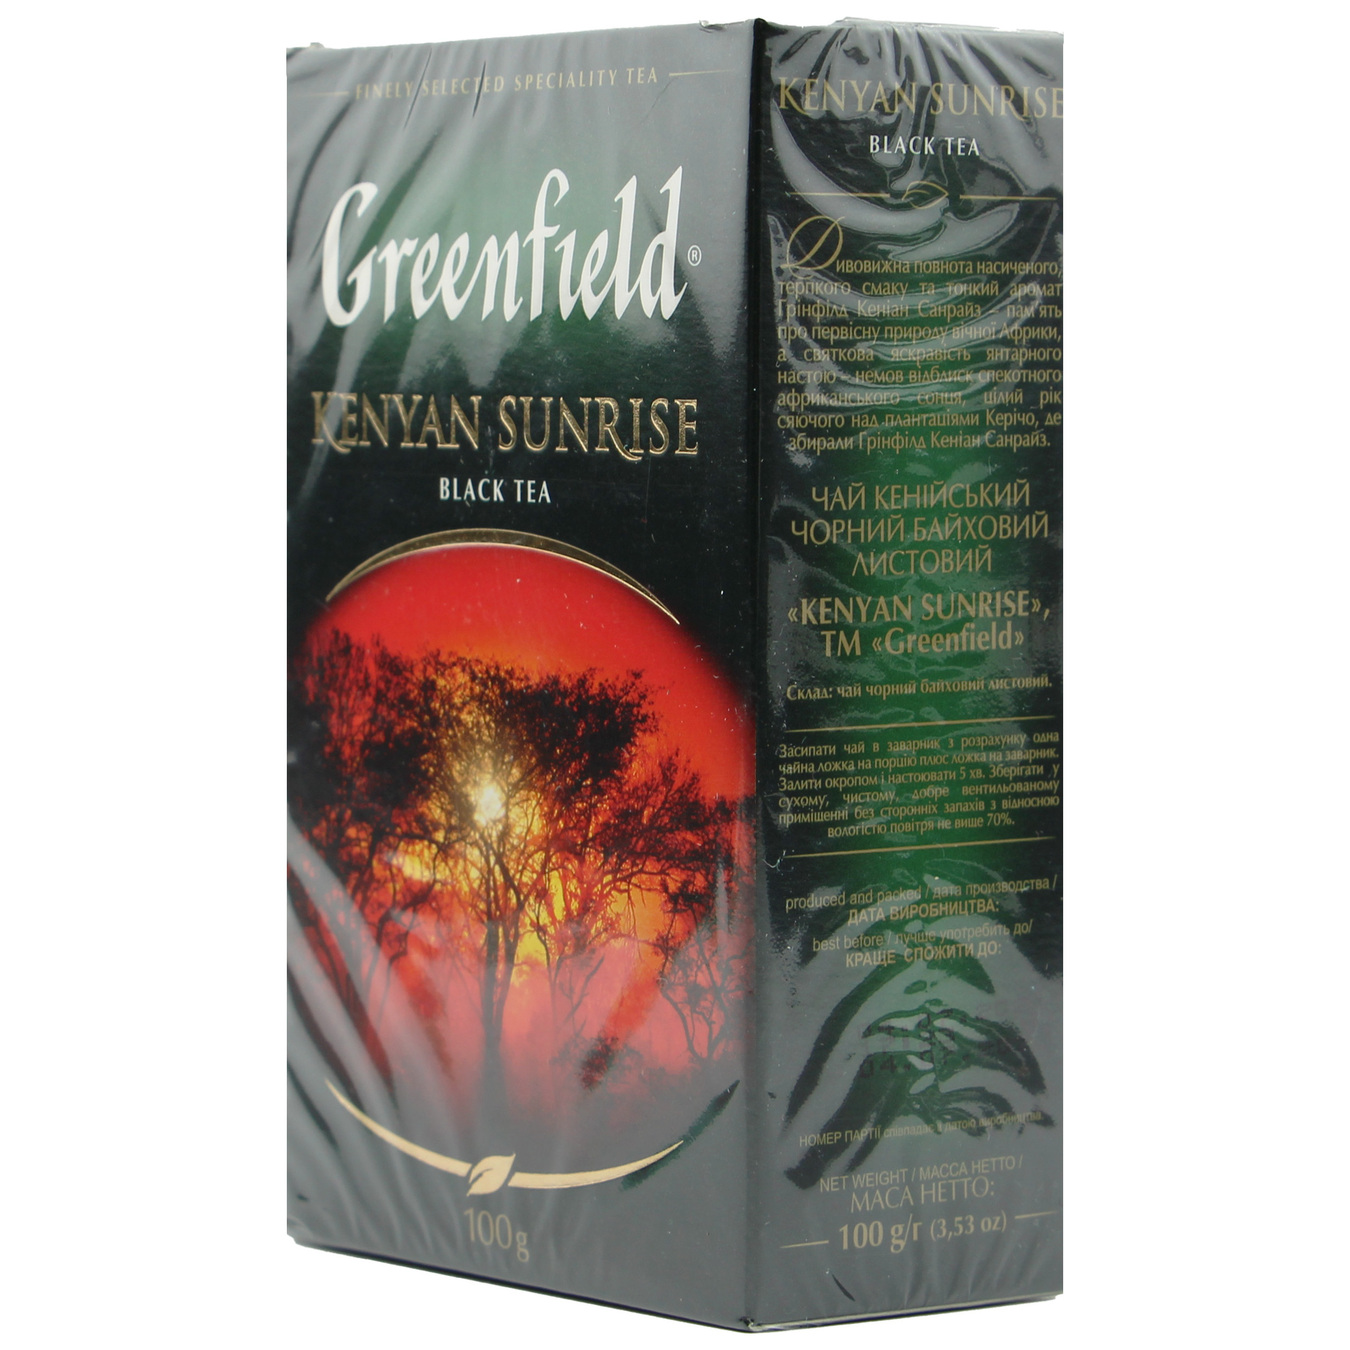 Greenfield Kenyan Sunrise black tea 100g 3